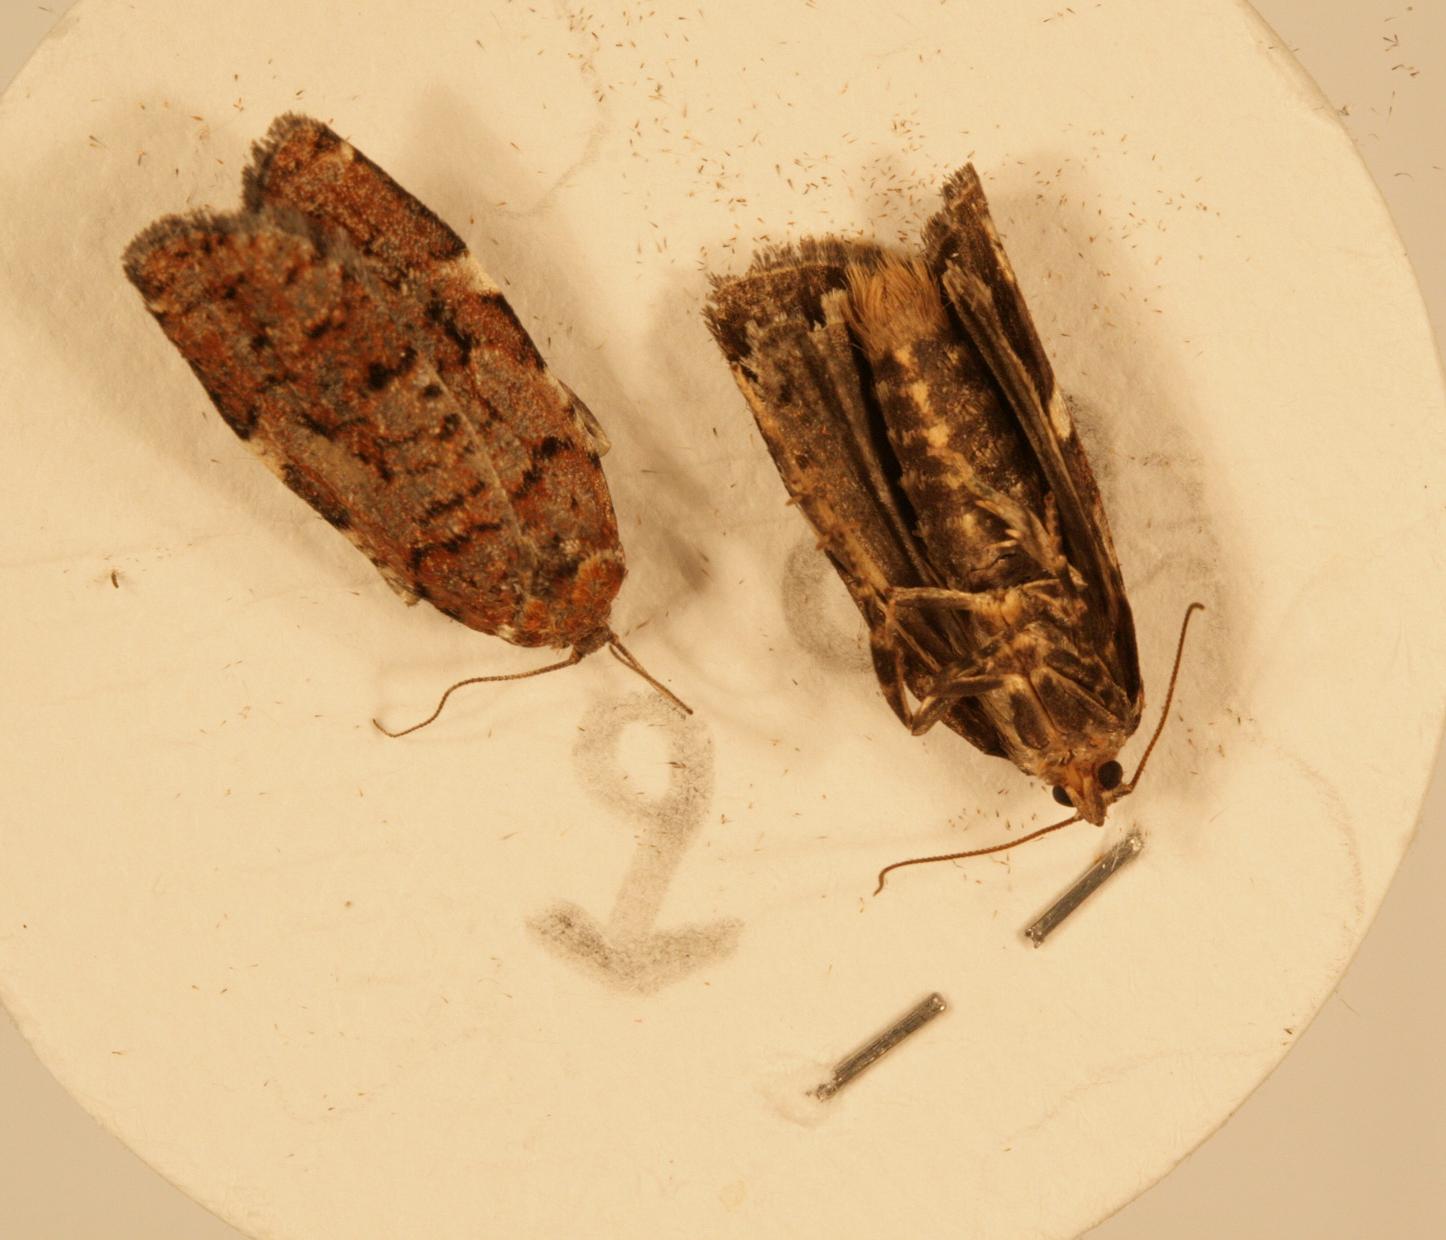 Choristoneura occidentalis males